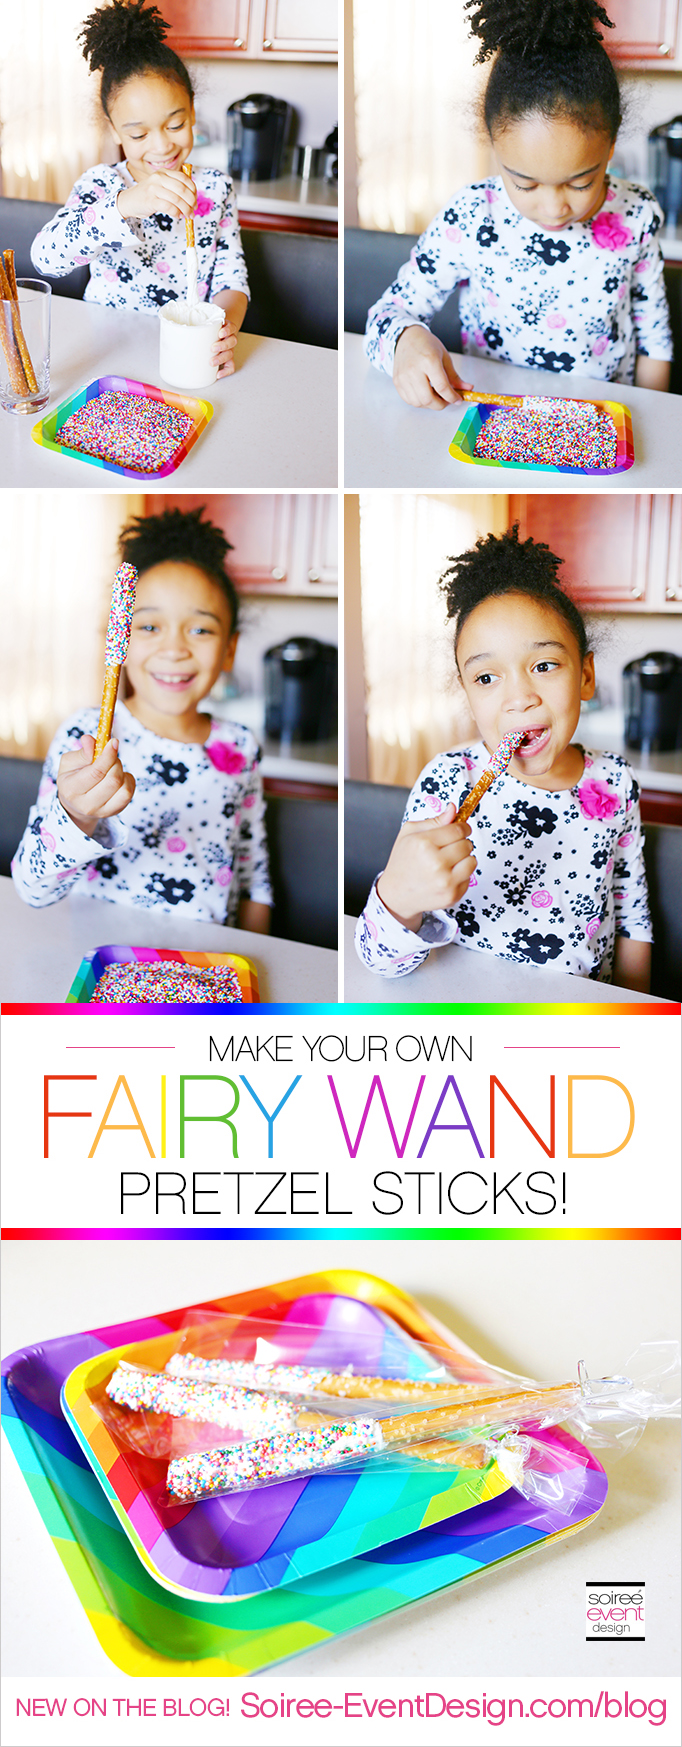 Fairy Party Desserts - Fairy Wand Pretzel Sticks